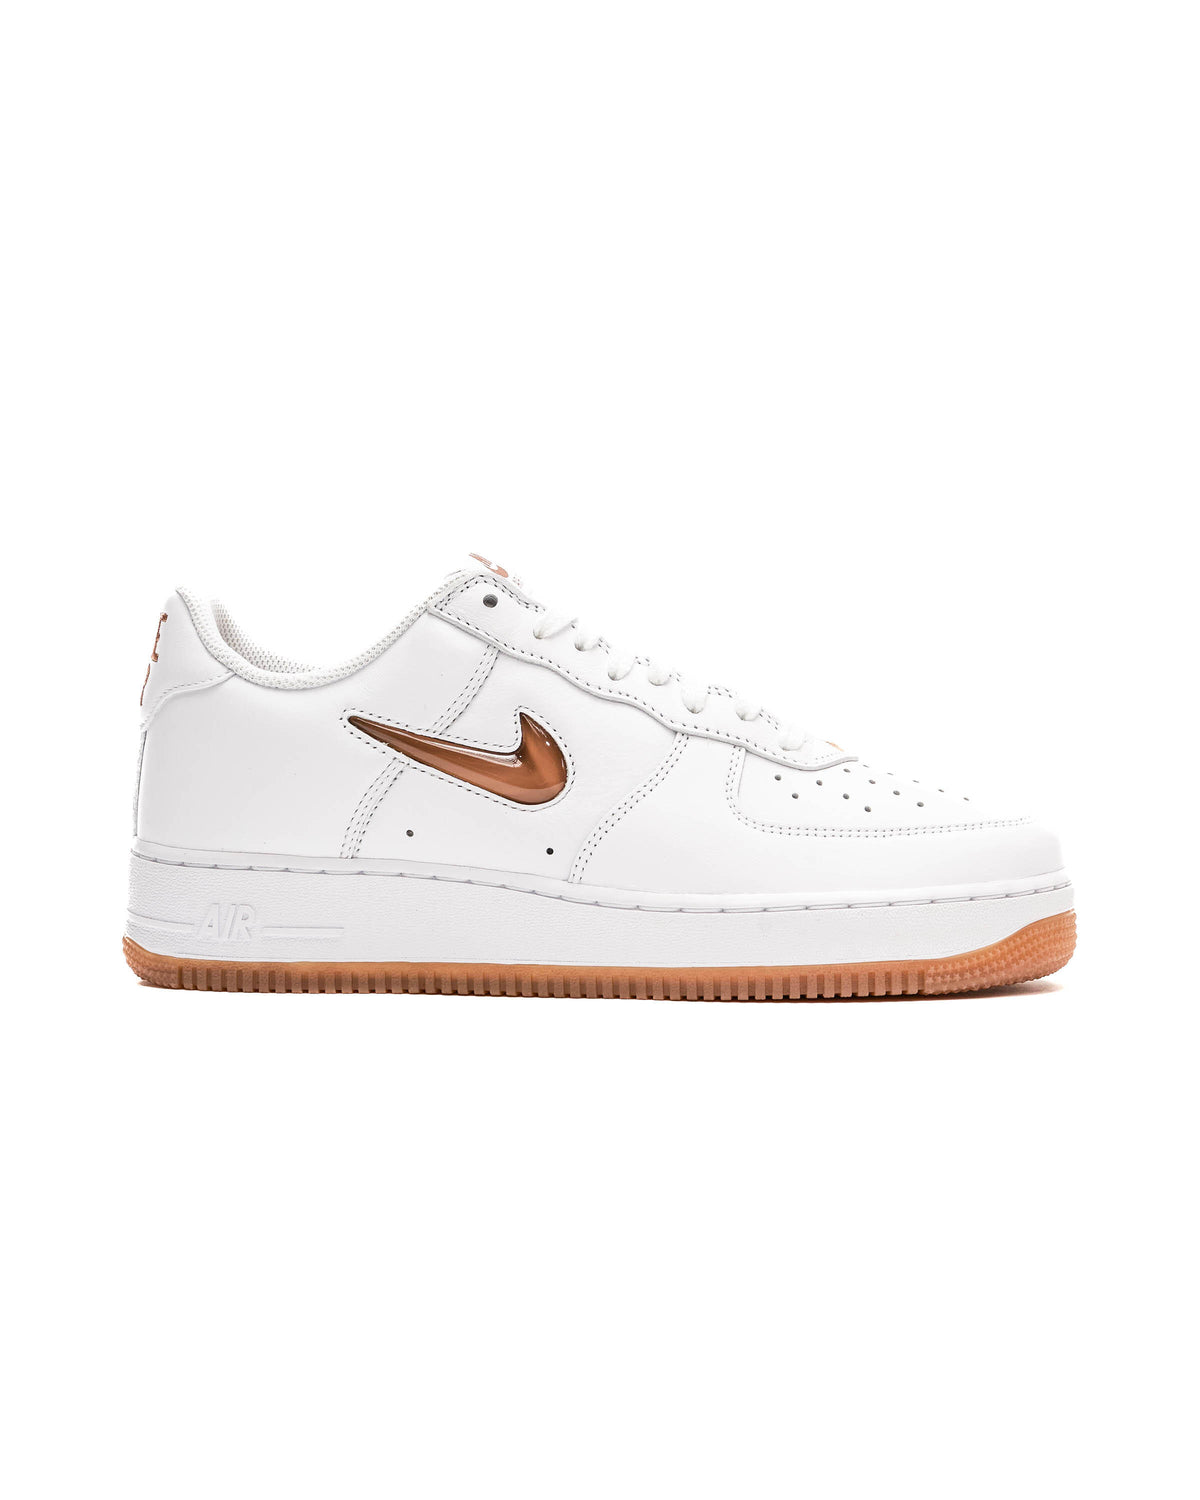 Nike Air Force 1 Mid 07 WB Flat Wheat Gum Light Brown DJ9158 200 Basketball  Shoe